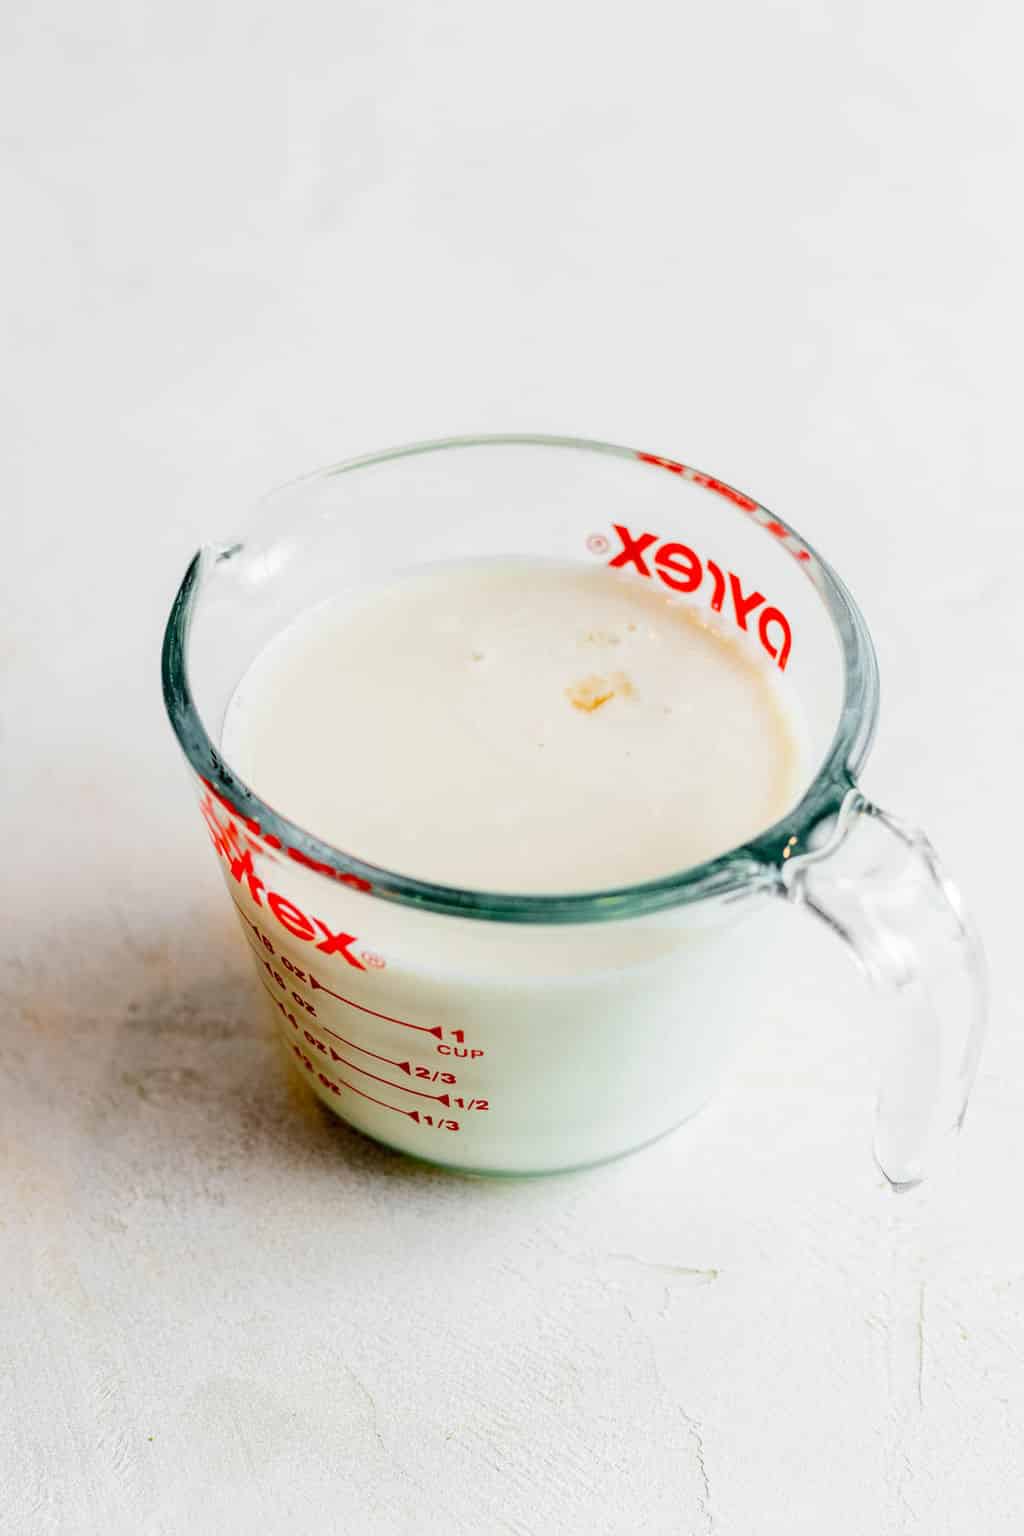 vegan milk and vinegar in a glass measuring cup.